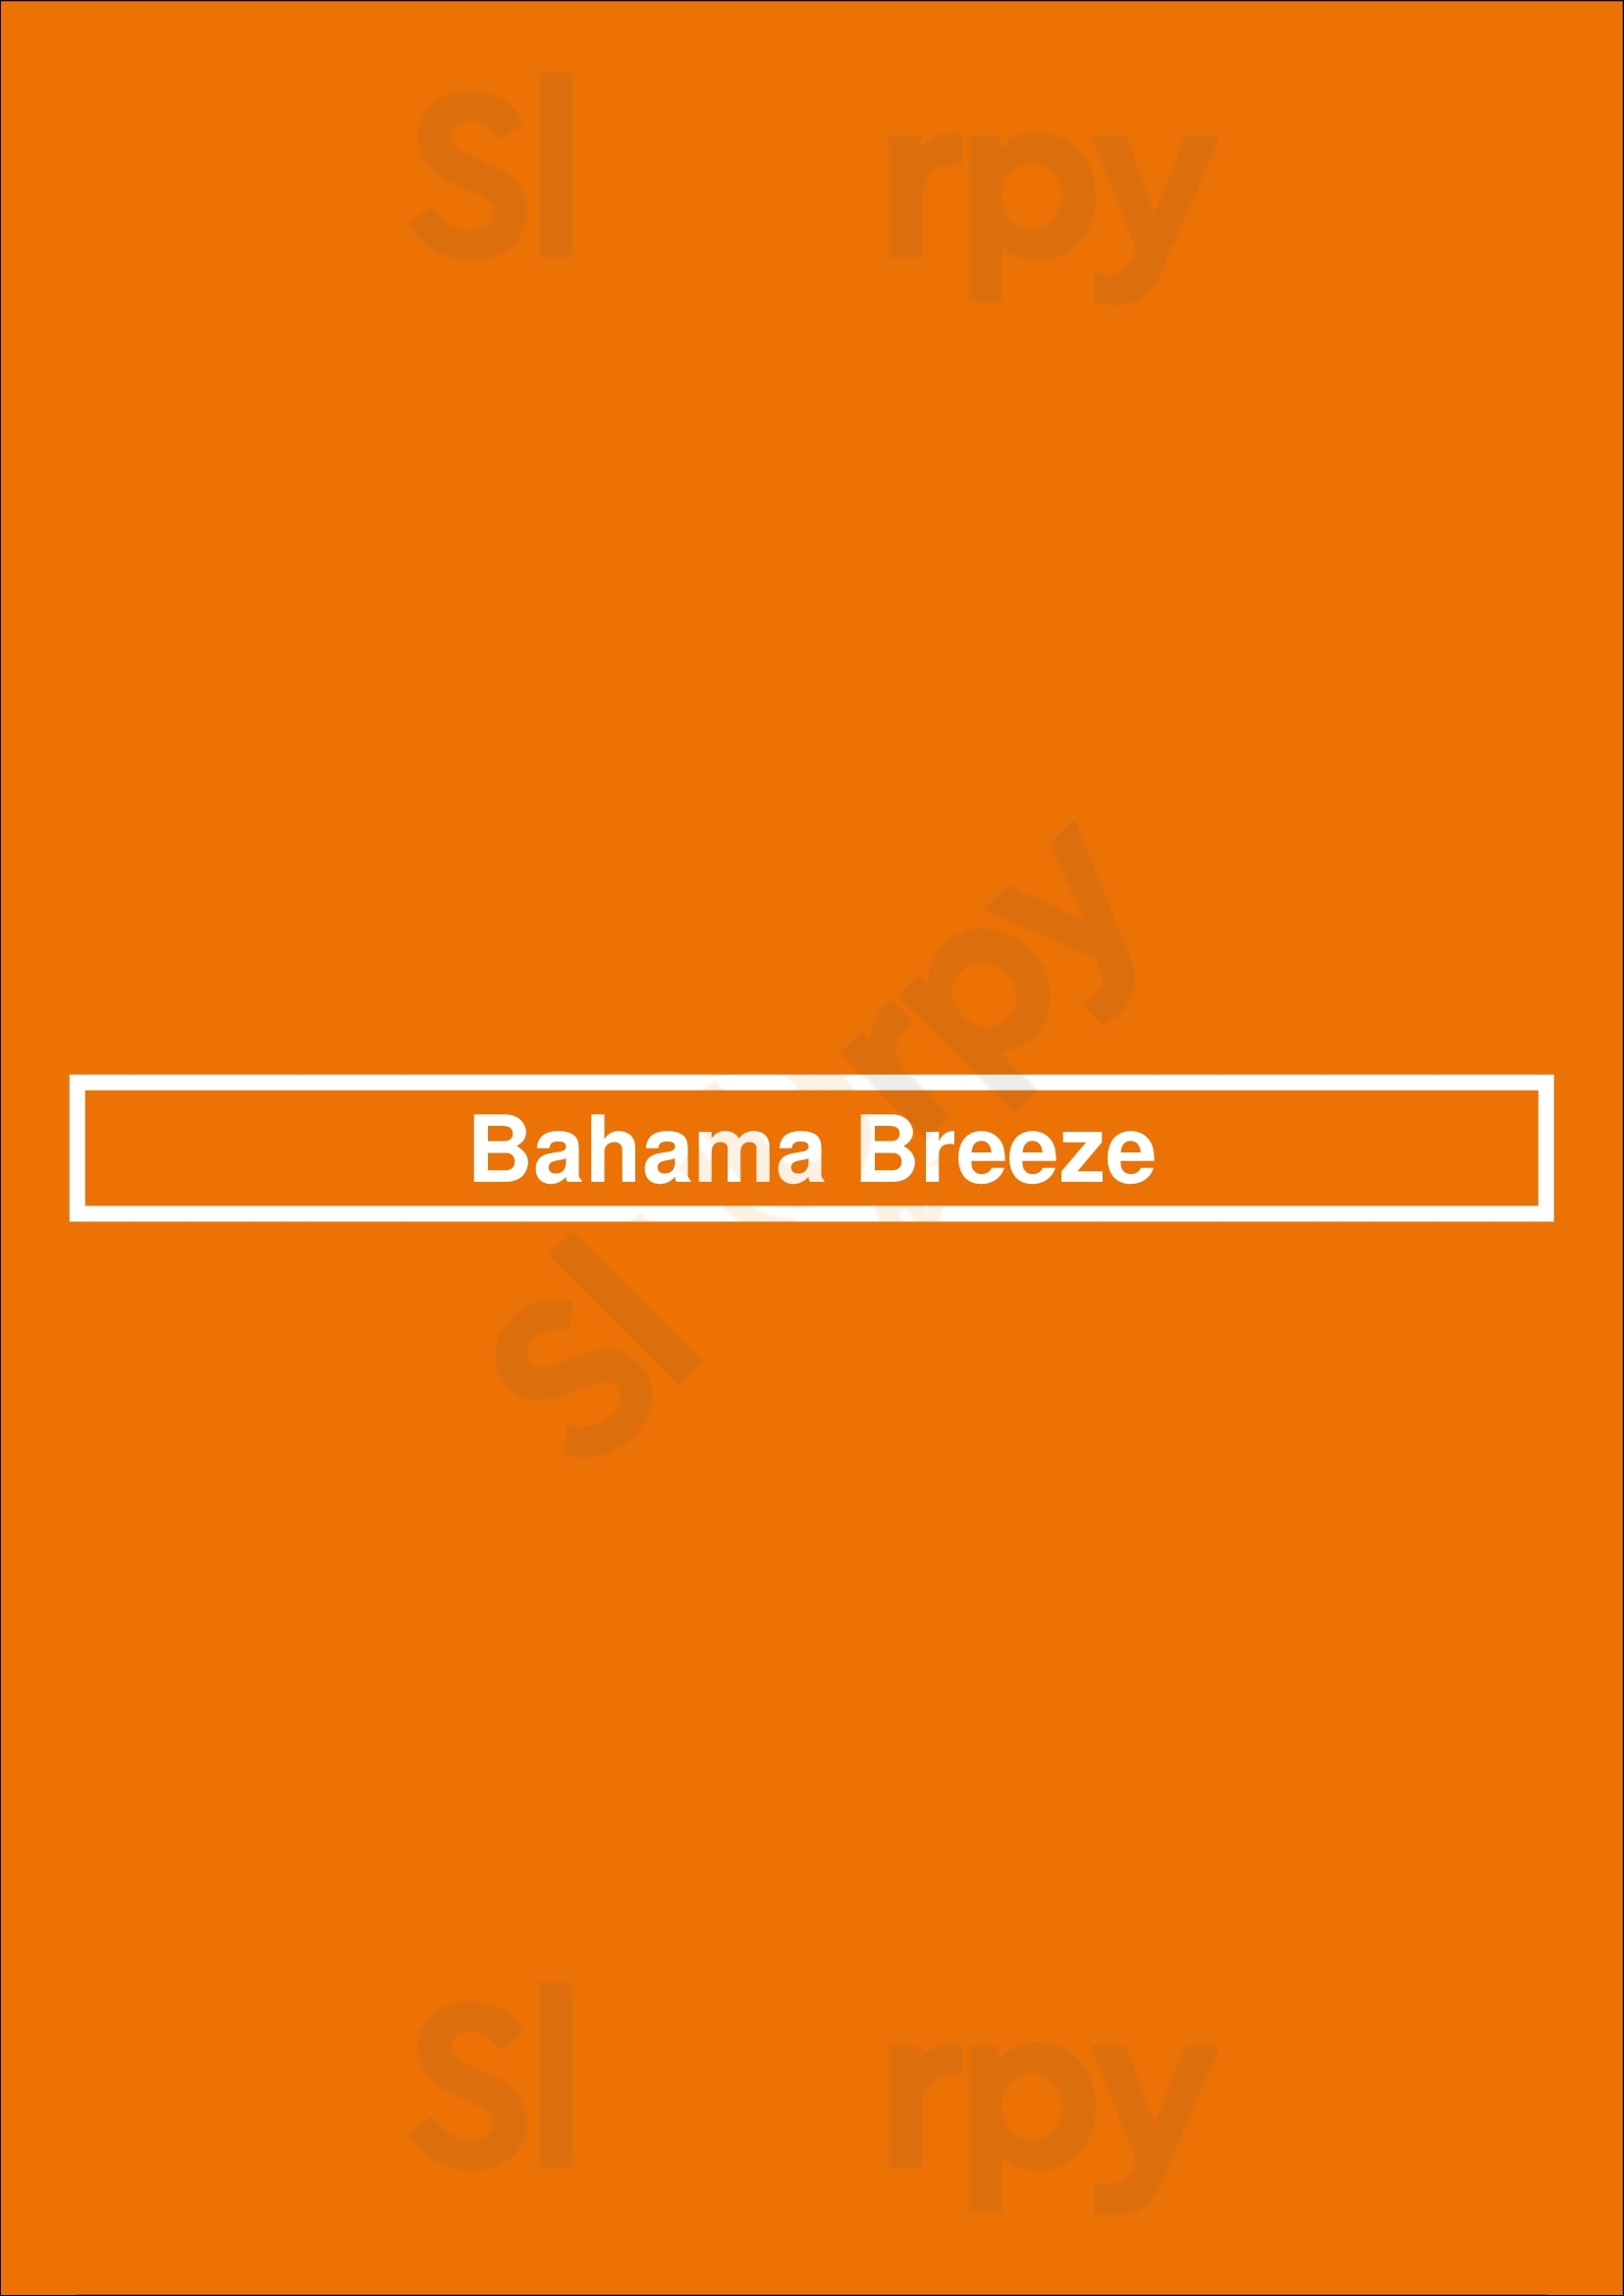 Bahama Breeze Orlando Menu - 1